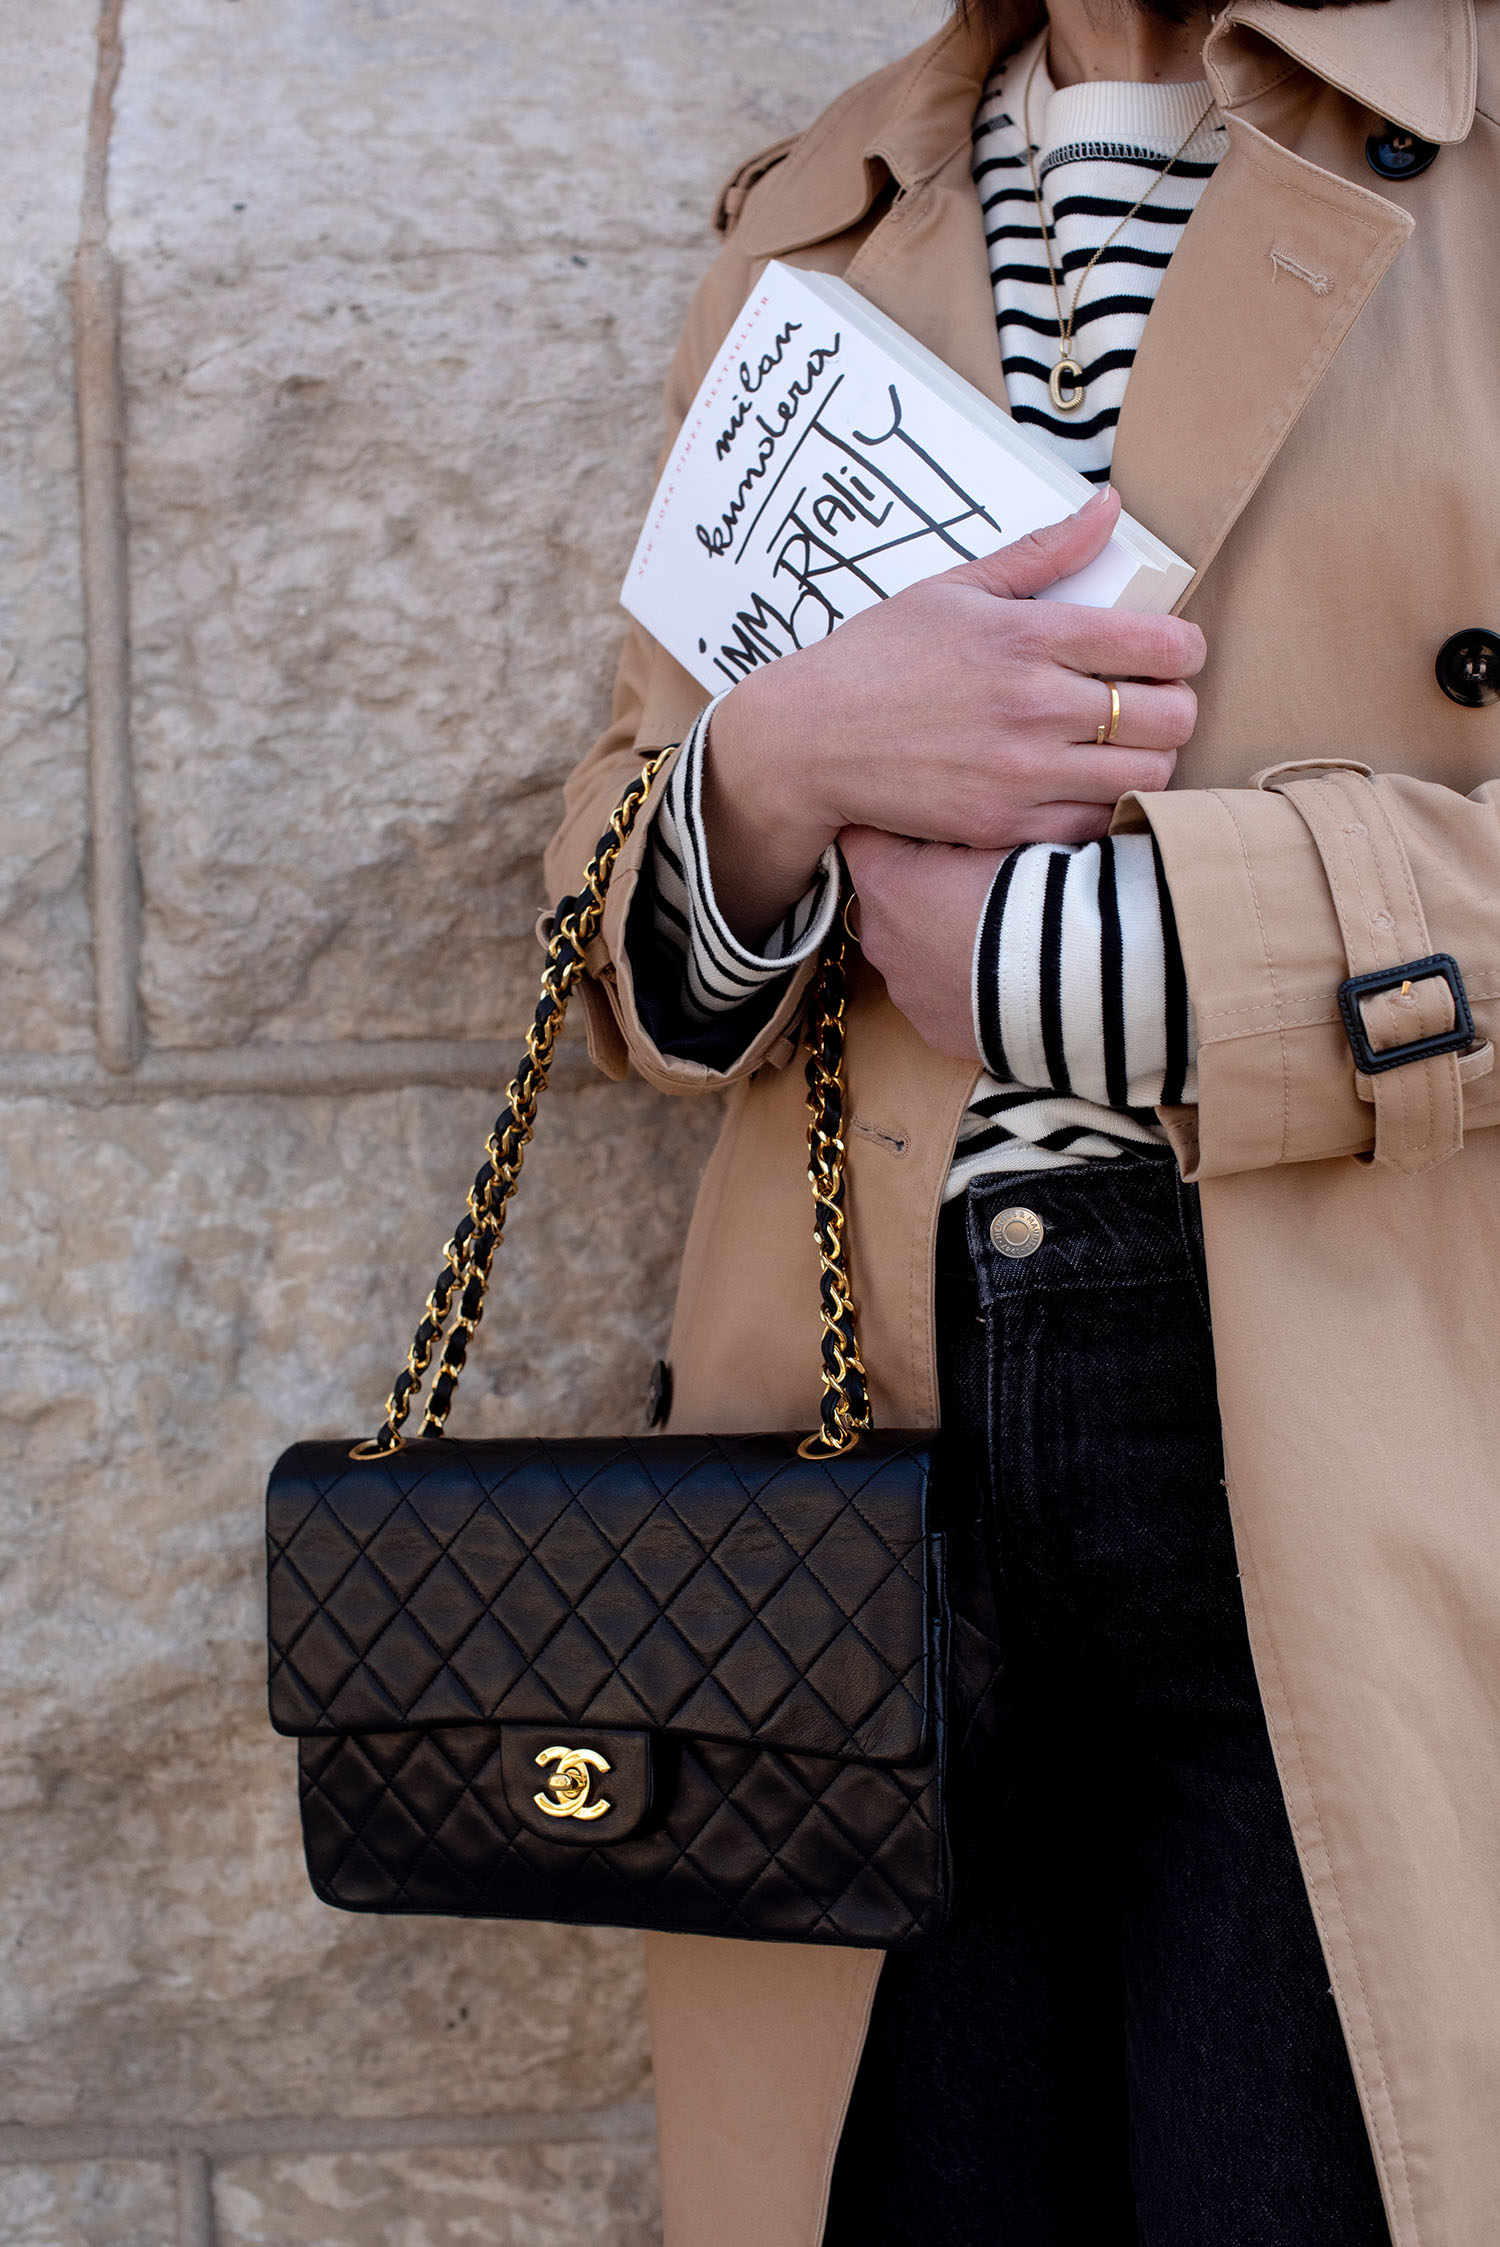 Coco & Vera - Chanel flap bag, Zara stripe top, Mejuri C necklace